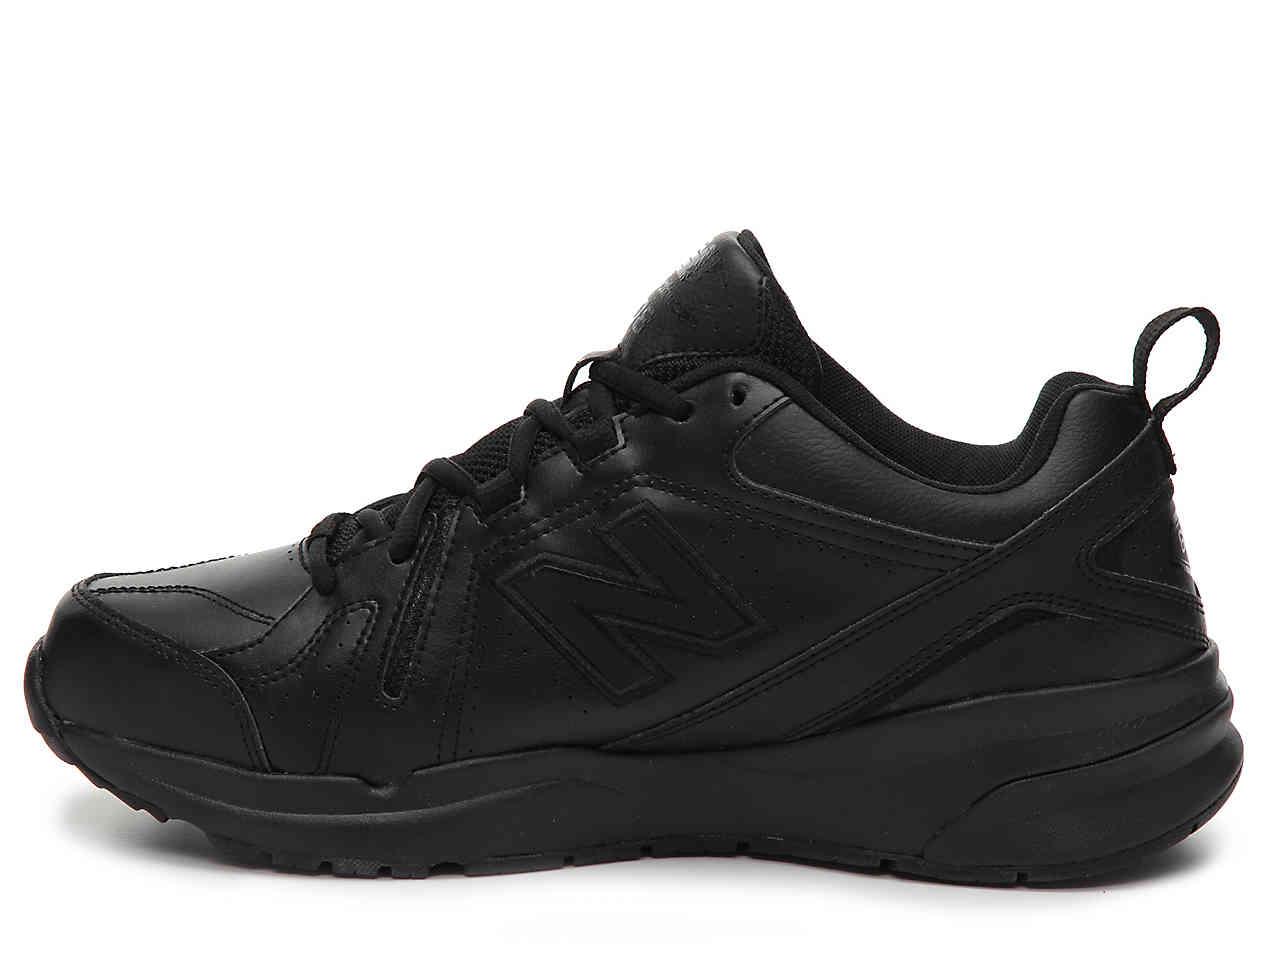 New Balance Leather 608 V5 Training Shoe in Black for Men - Lyst